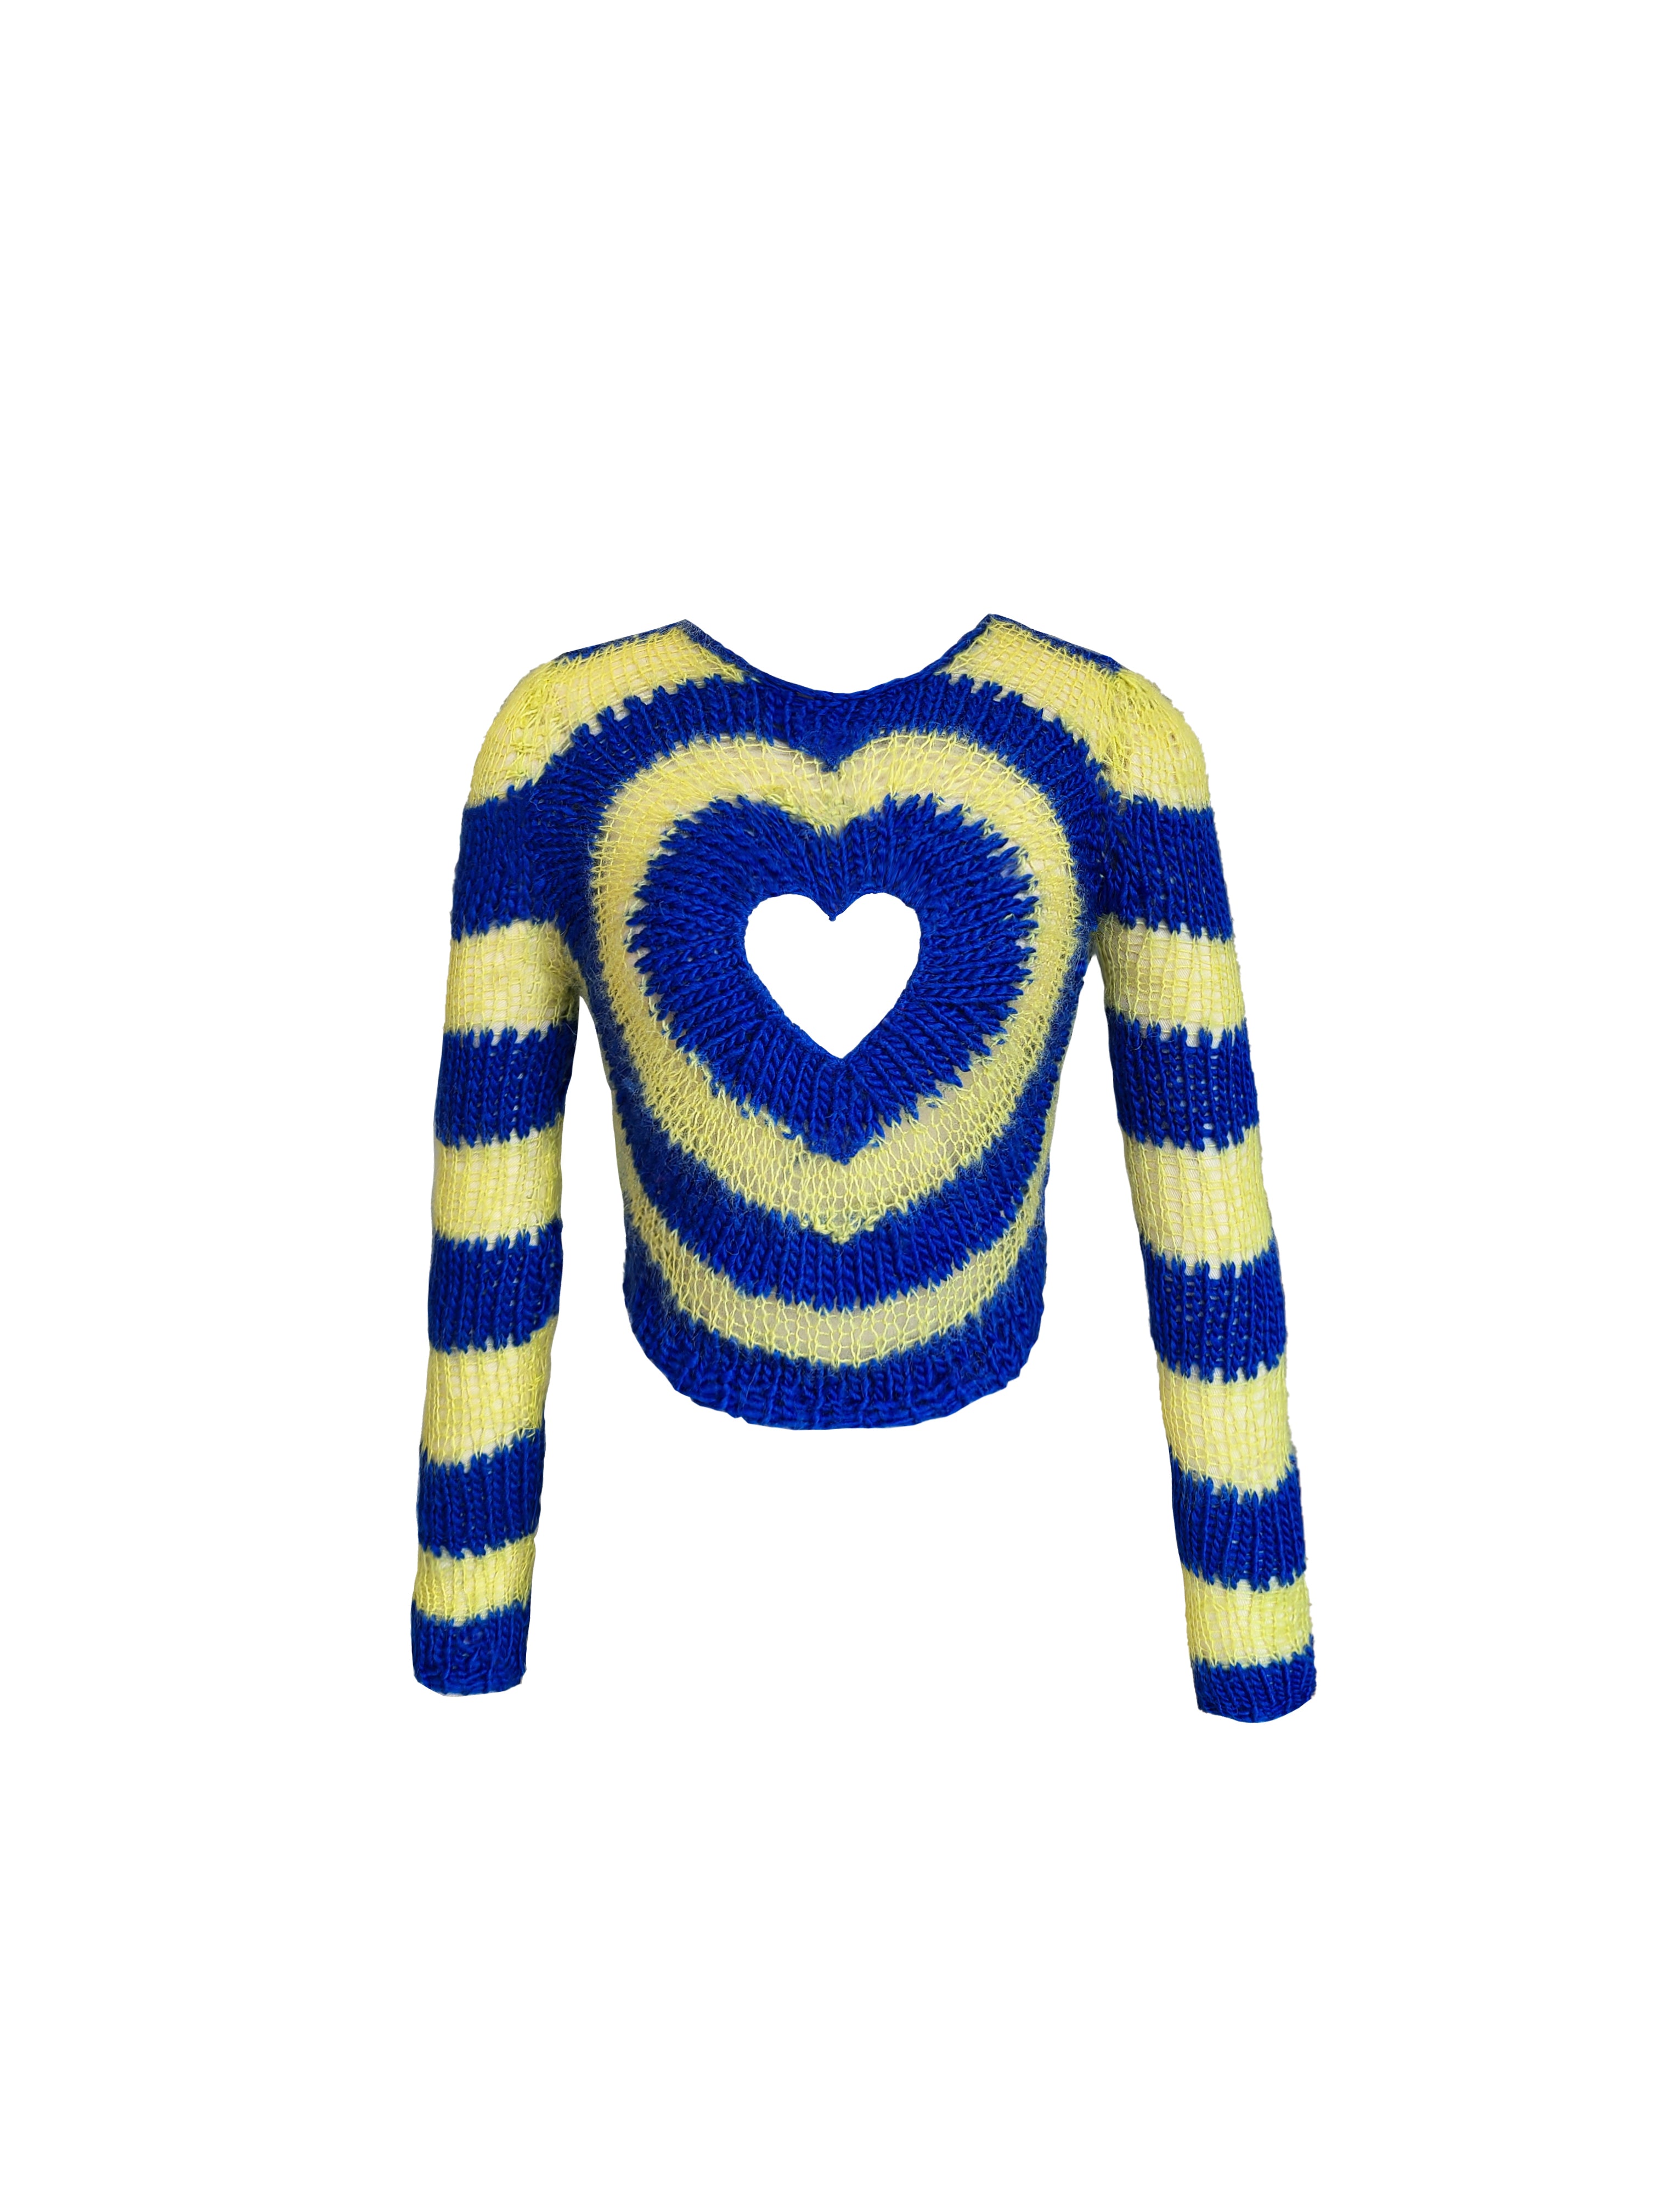 Radiant Heart Knit Sweater  Crochet fashion, Crochet clothes